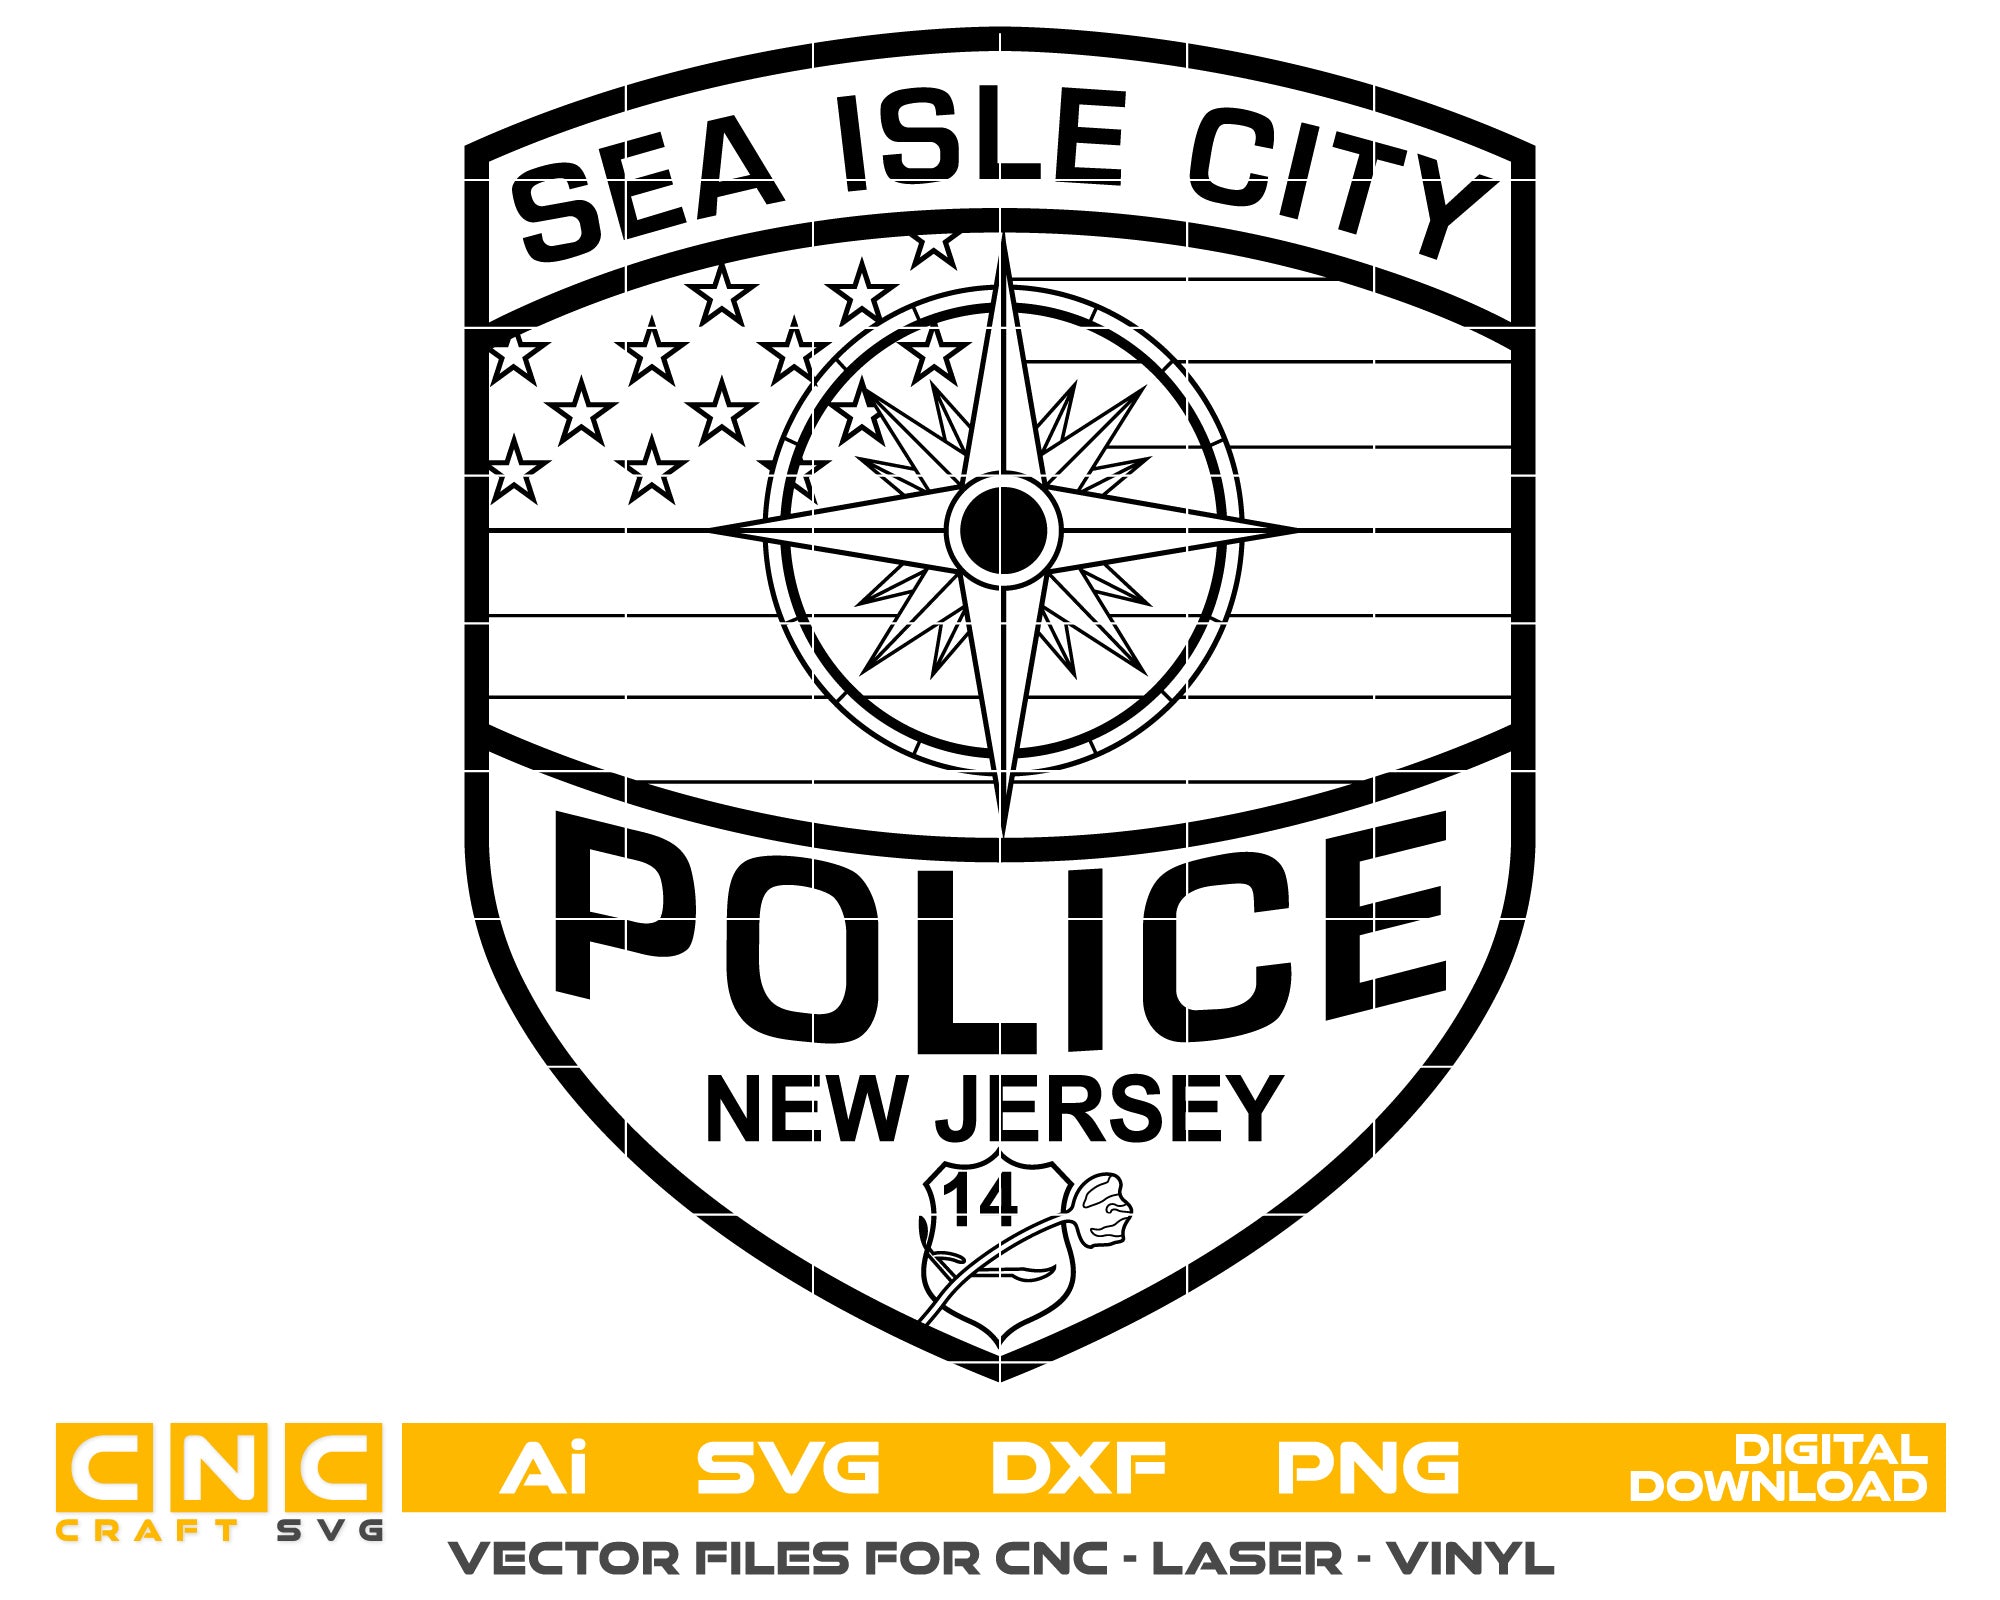 Sea Isle City Police Badge vector art